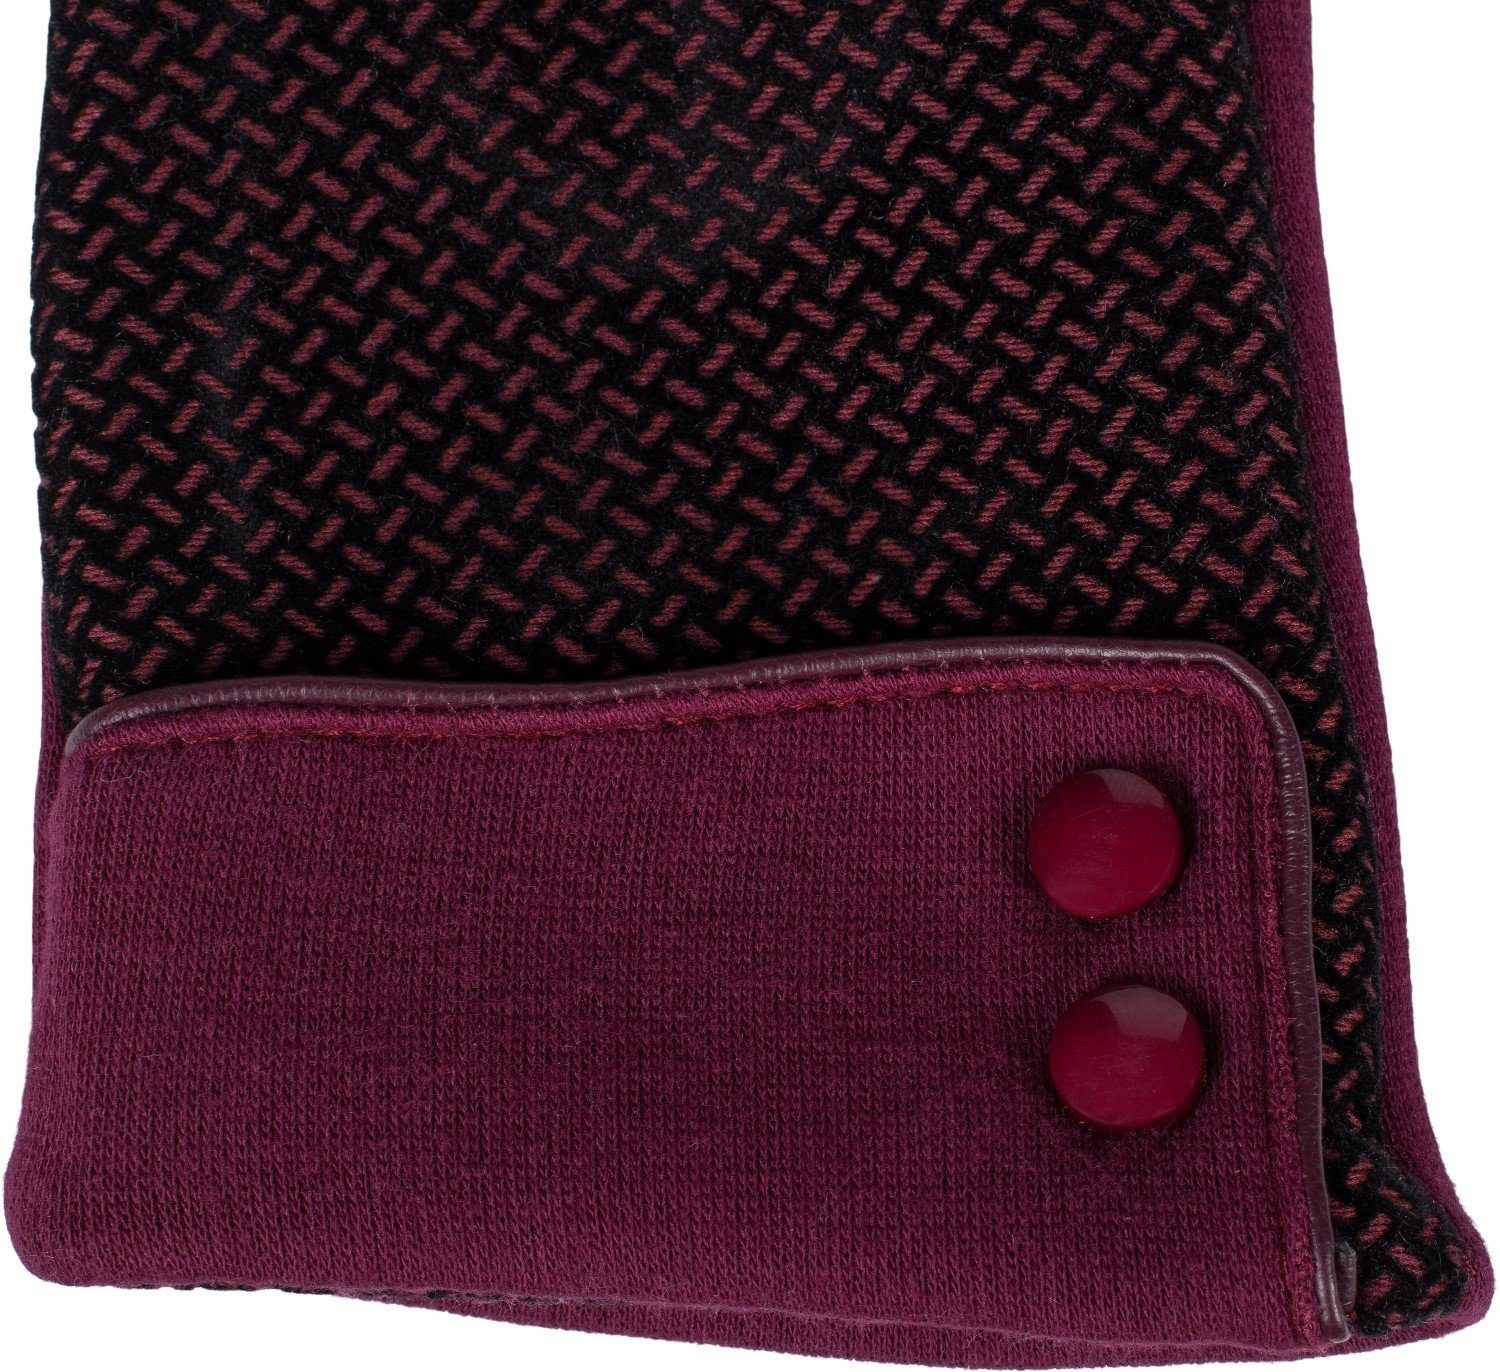 styleBREAKER Baumwollhandschuhe Touchscreen Handschuhe mit Muster weichem Riffel Bordeaux-Rot